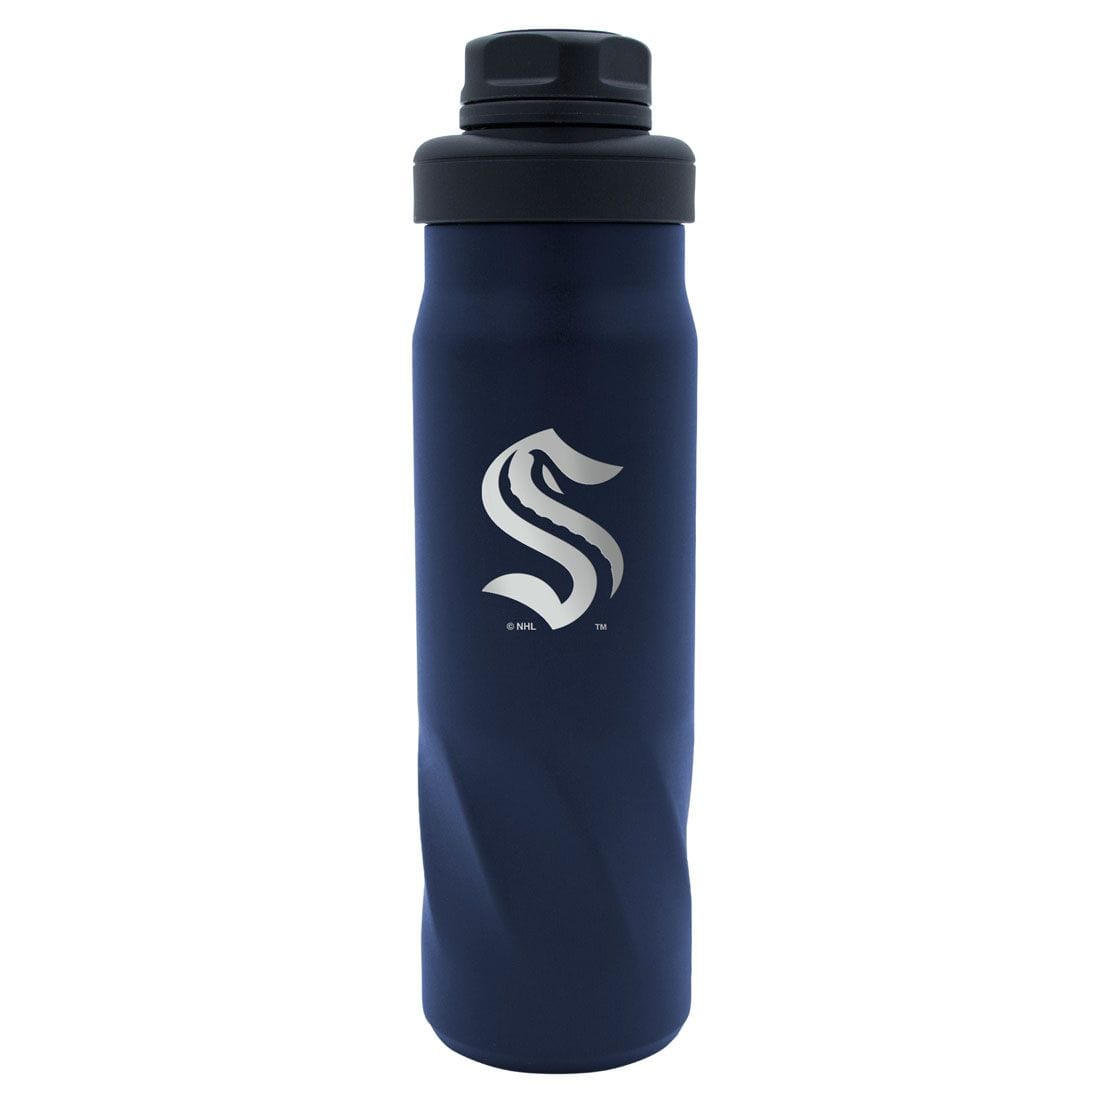 Stainless Steel Water Bottle (20 oz)